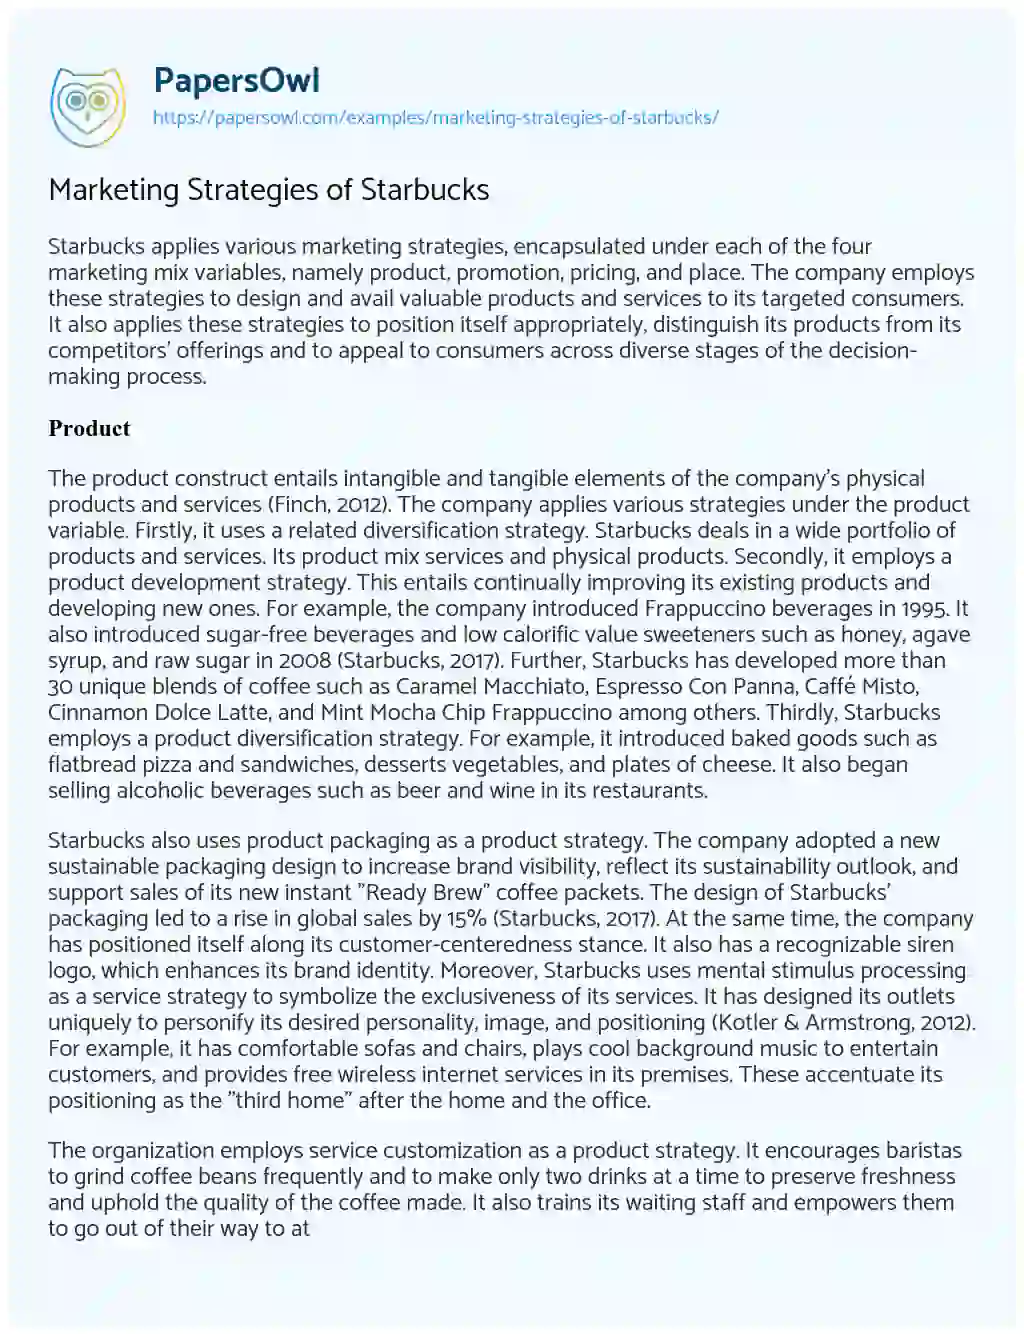 Essay on Marketing Strategies of Starbucks